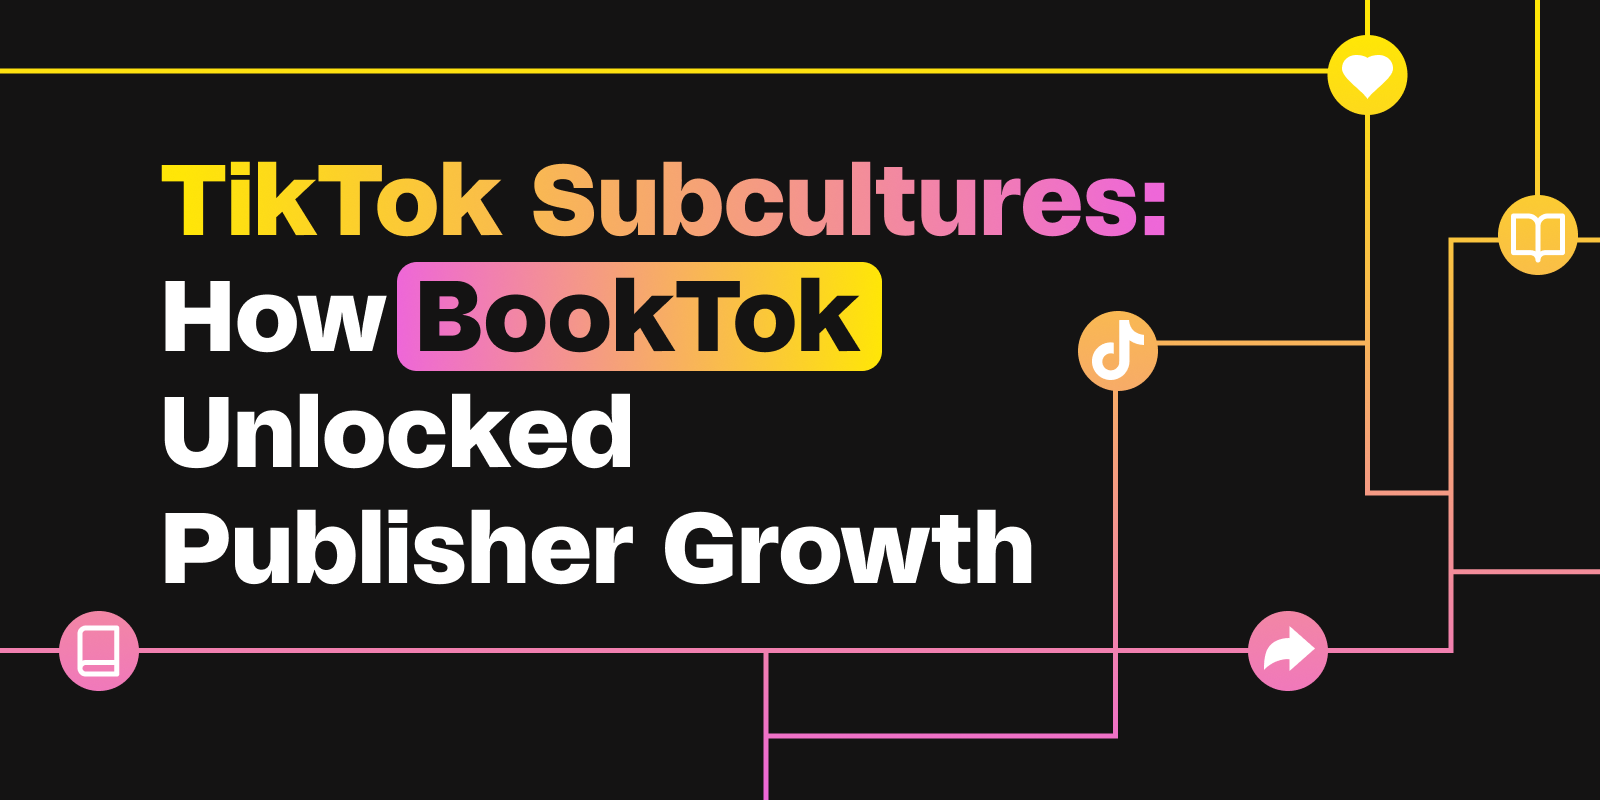 TikTok Subcultures: How BookTok Unlocked Publisher Growth